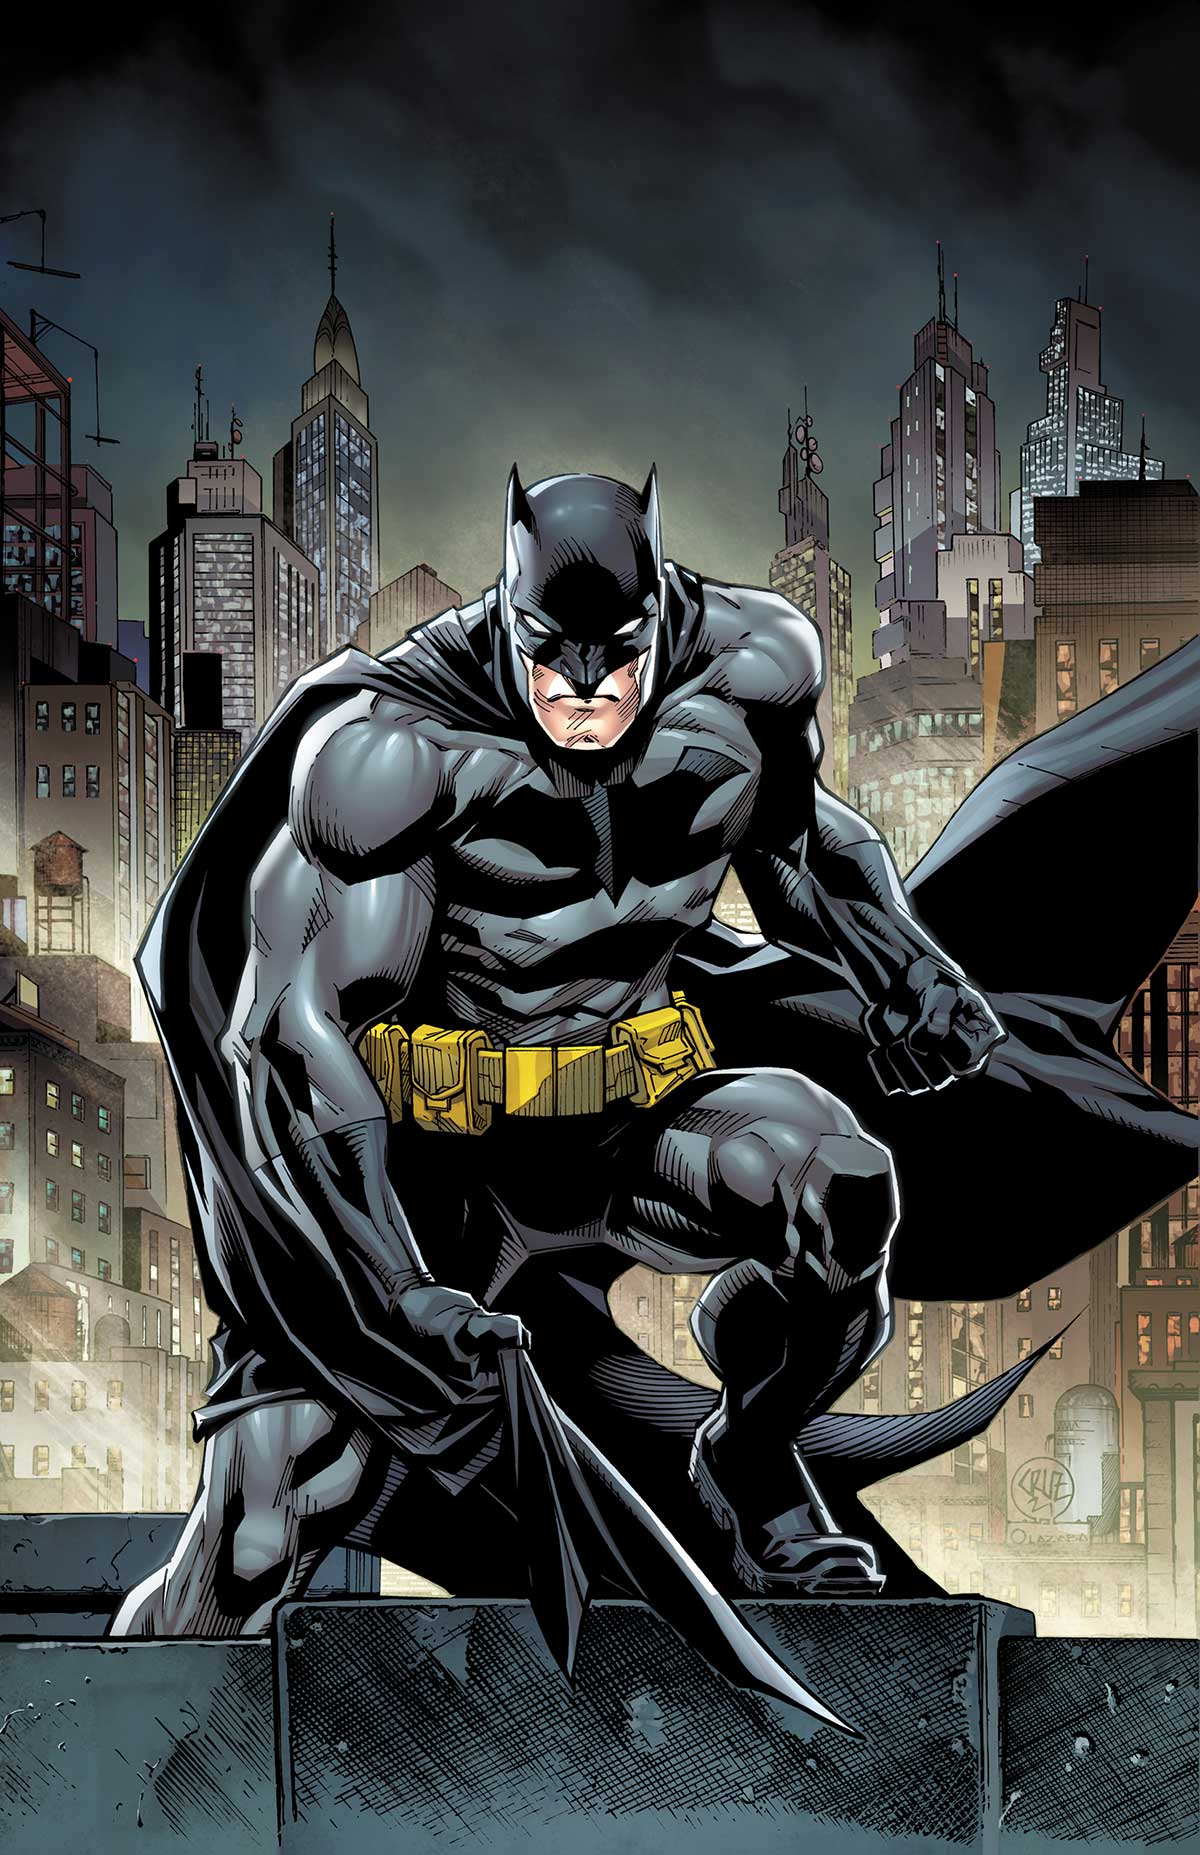 Batman 75: First look at Batman-Catwoman reunion in City of Bane